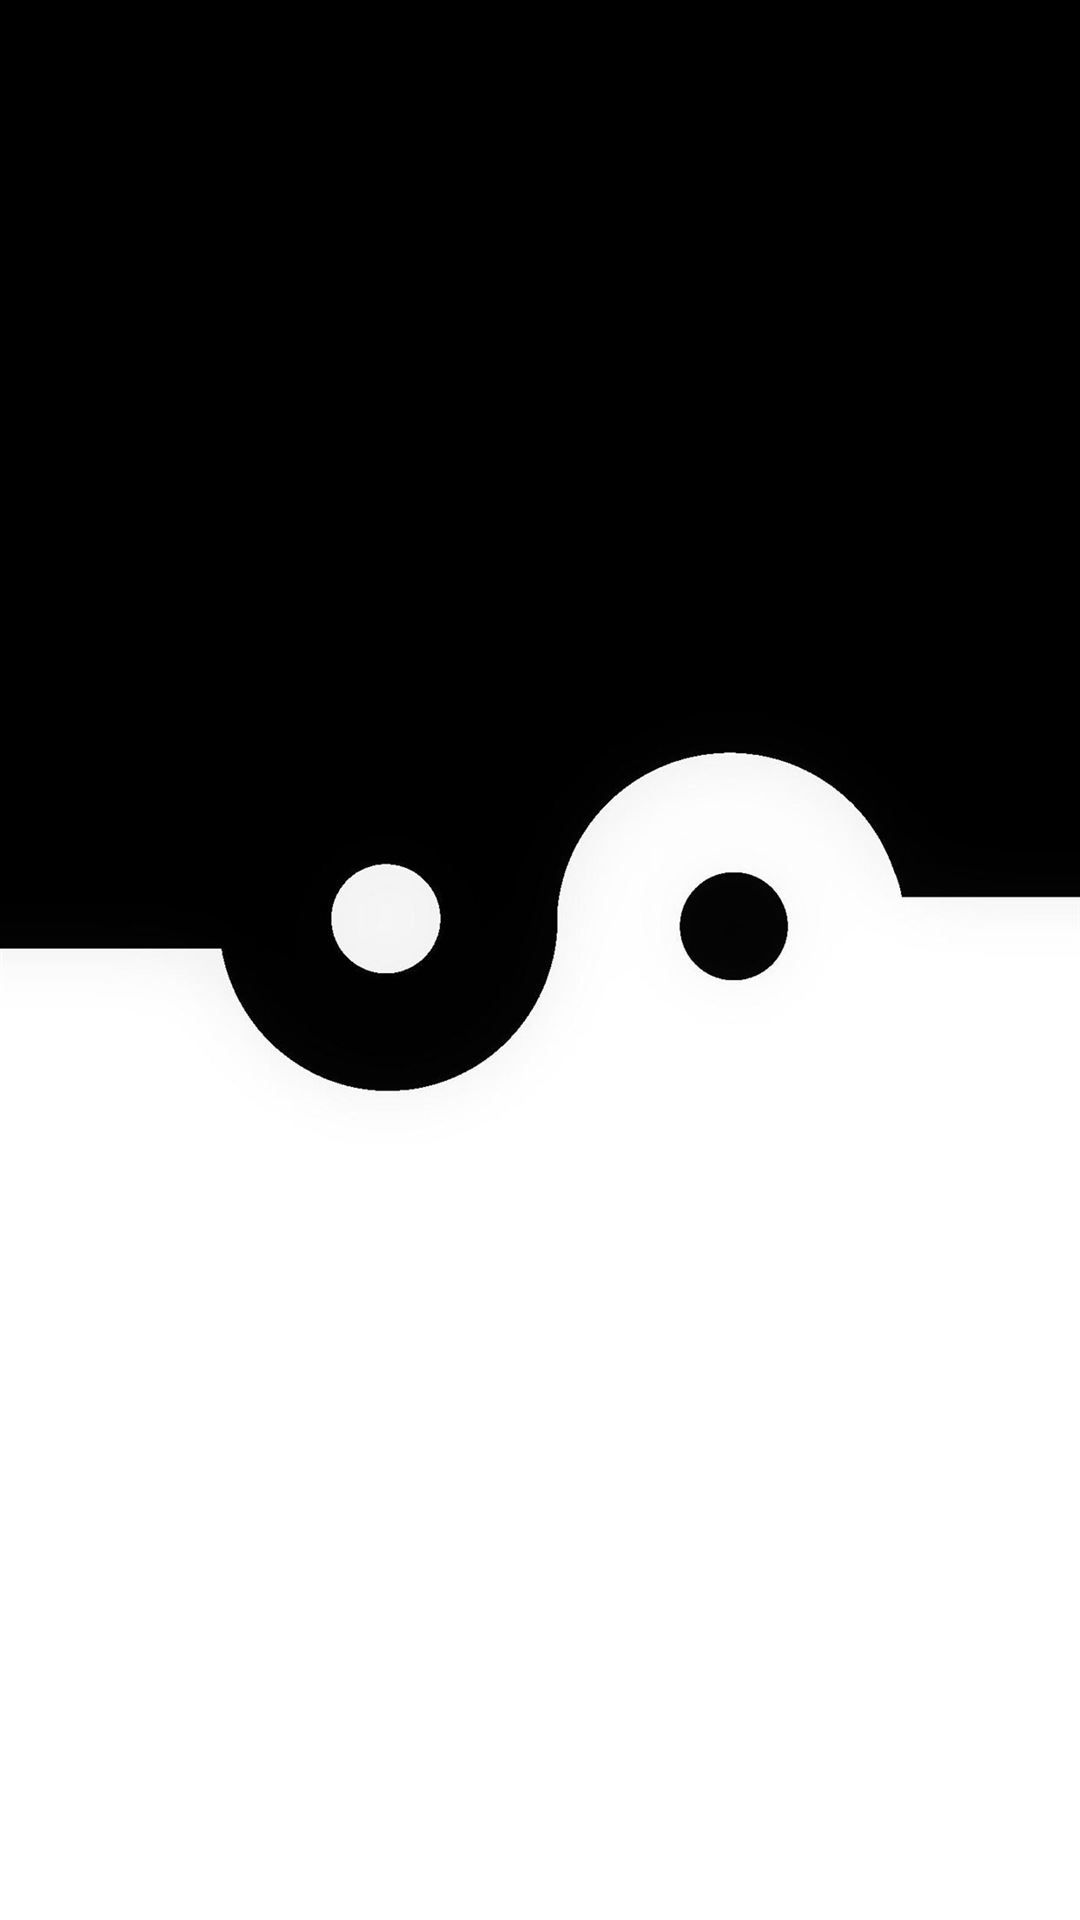 Yin yang minimalist S10 iPhone 8 Wallpaper Free Download